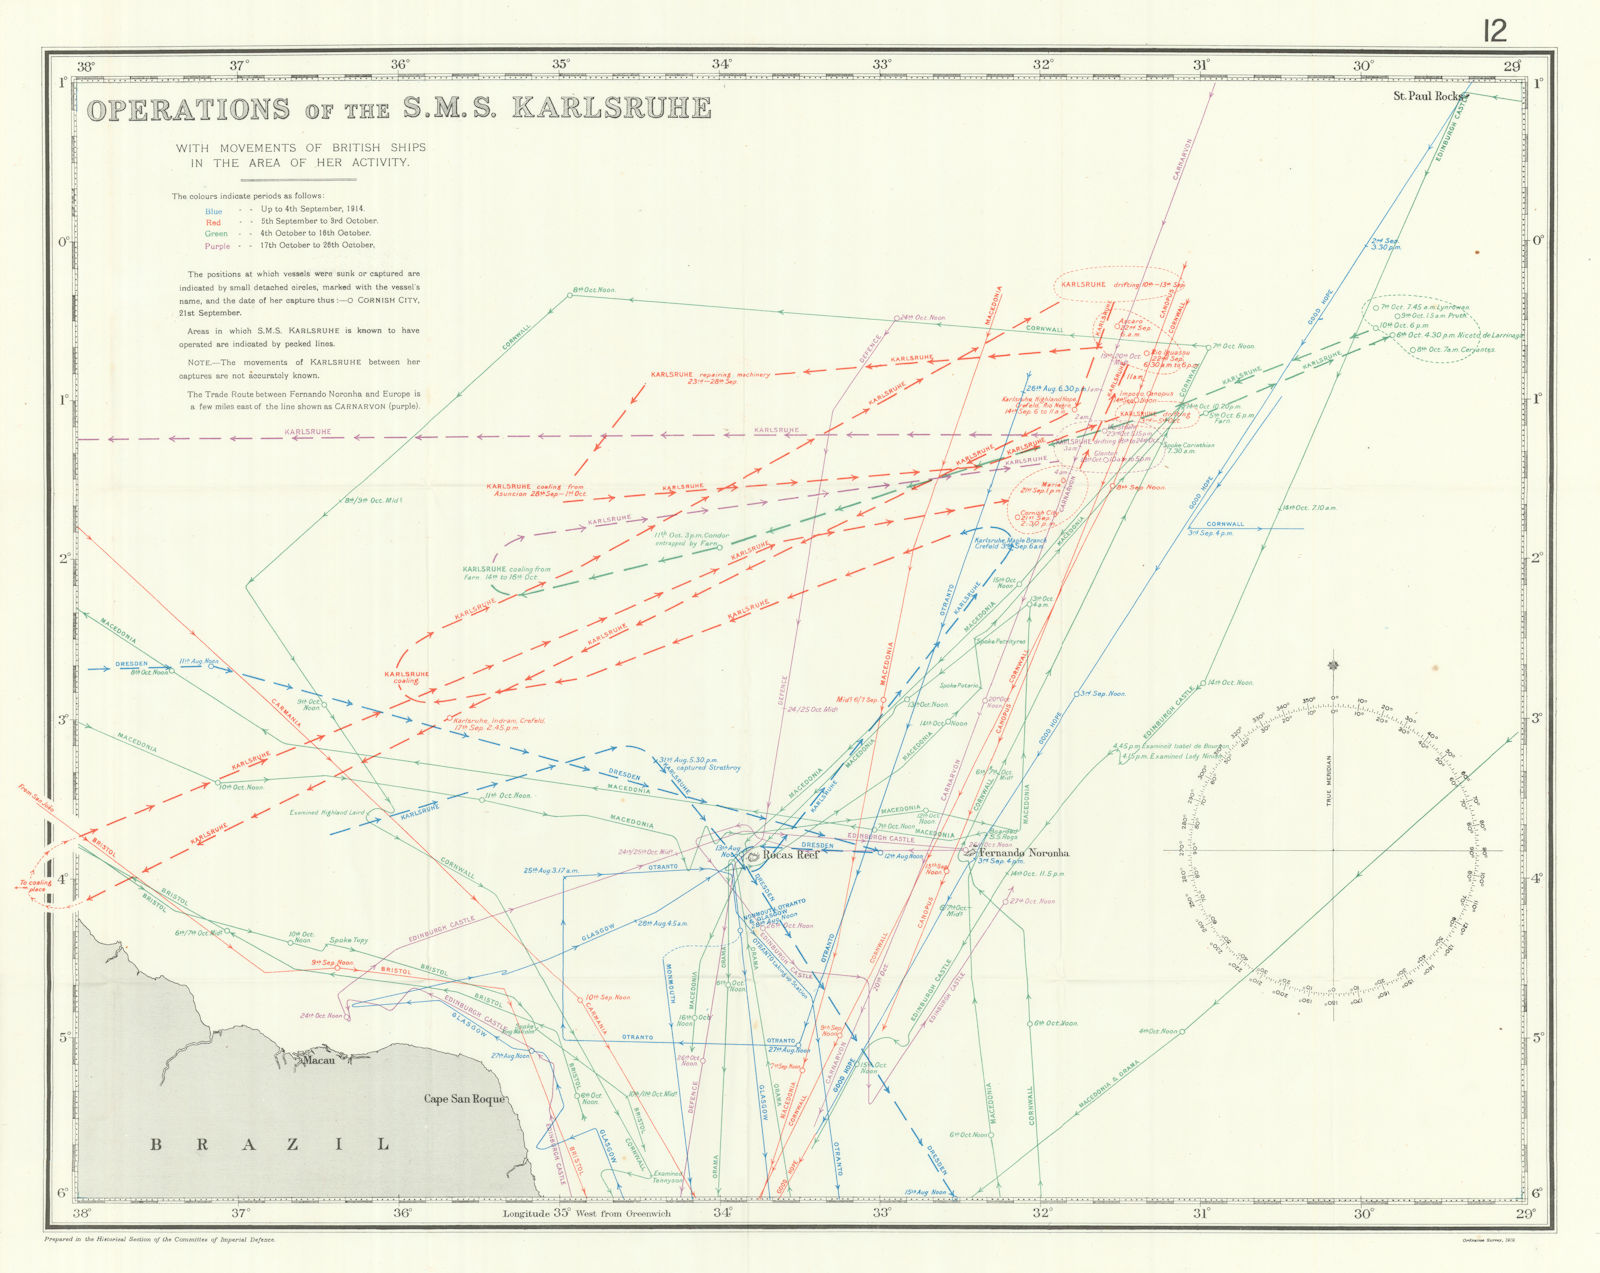 SMS Karlsruhe operations 1914. British movements. First World War. 1920 map